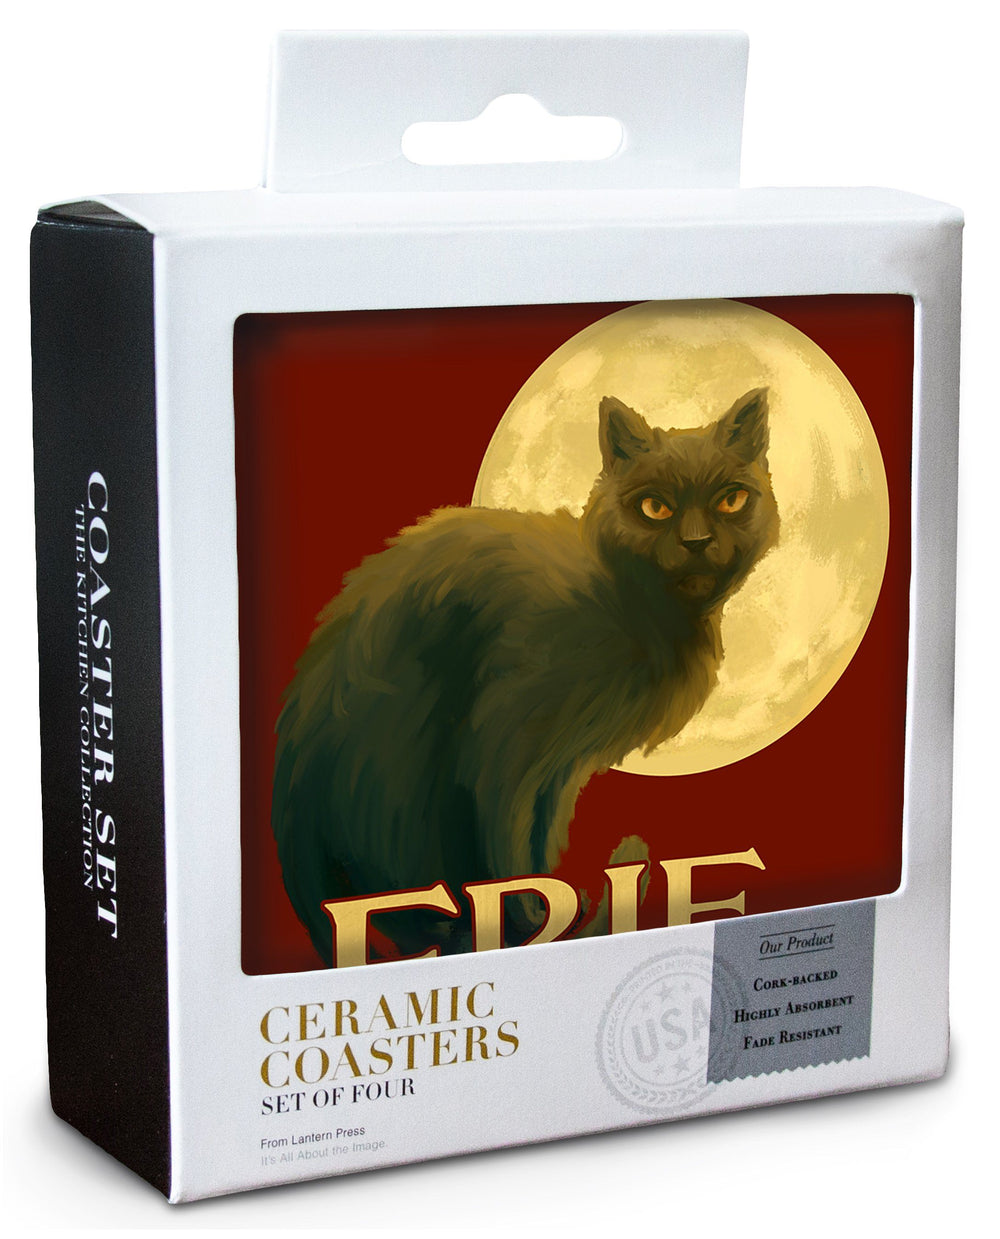 Erie, Pennsylvania, Black Cat, Halloween Oil Painting, Contour, Lantern Press Artwork, Coaster Set Coasters Lantern Press 